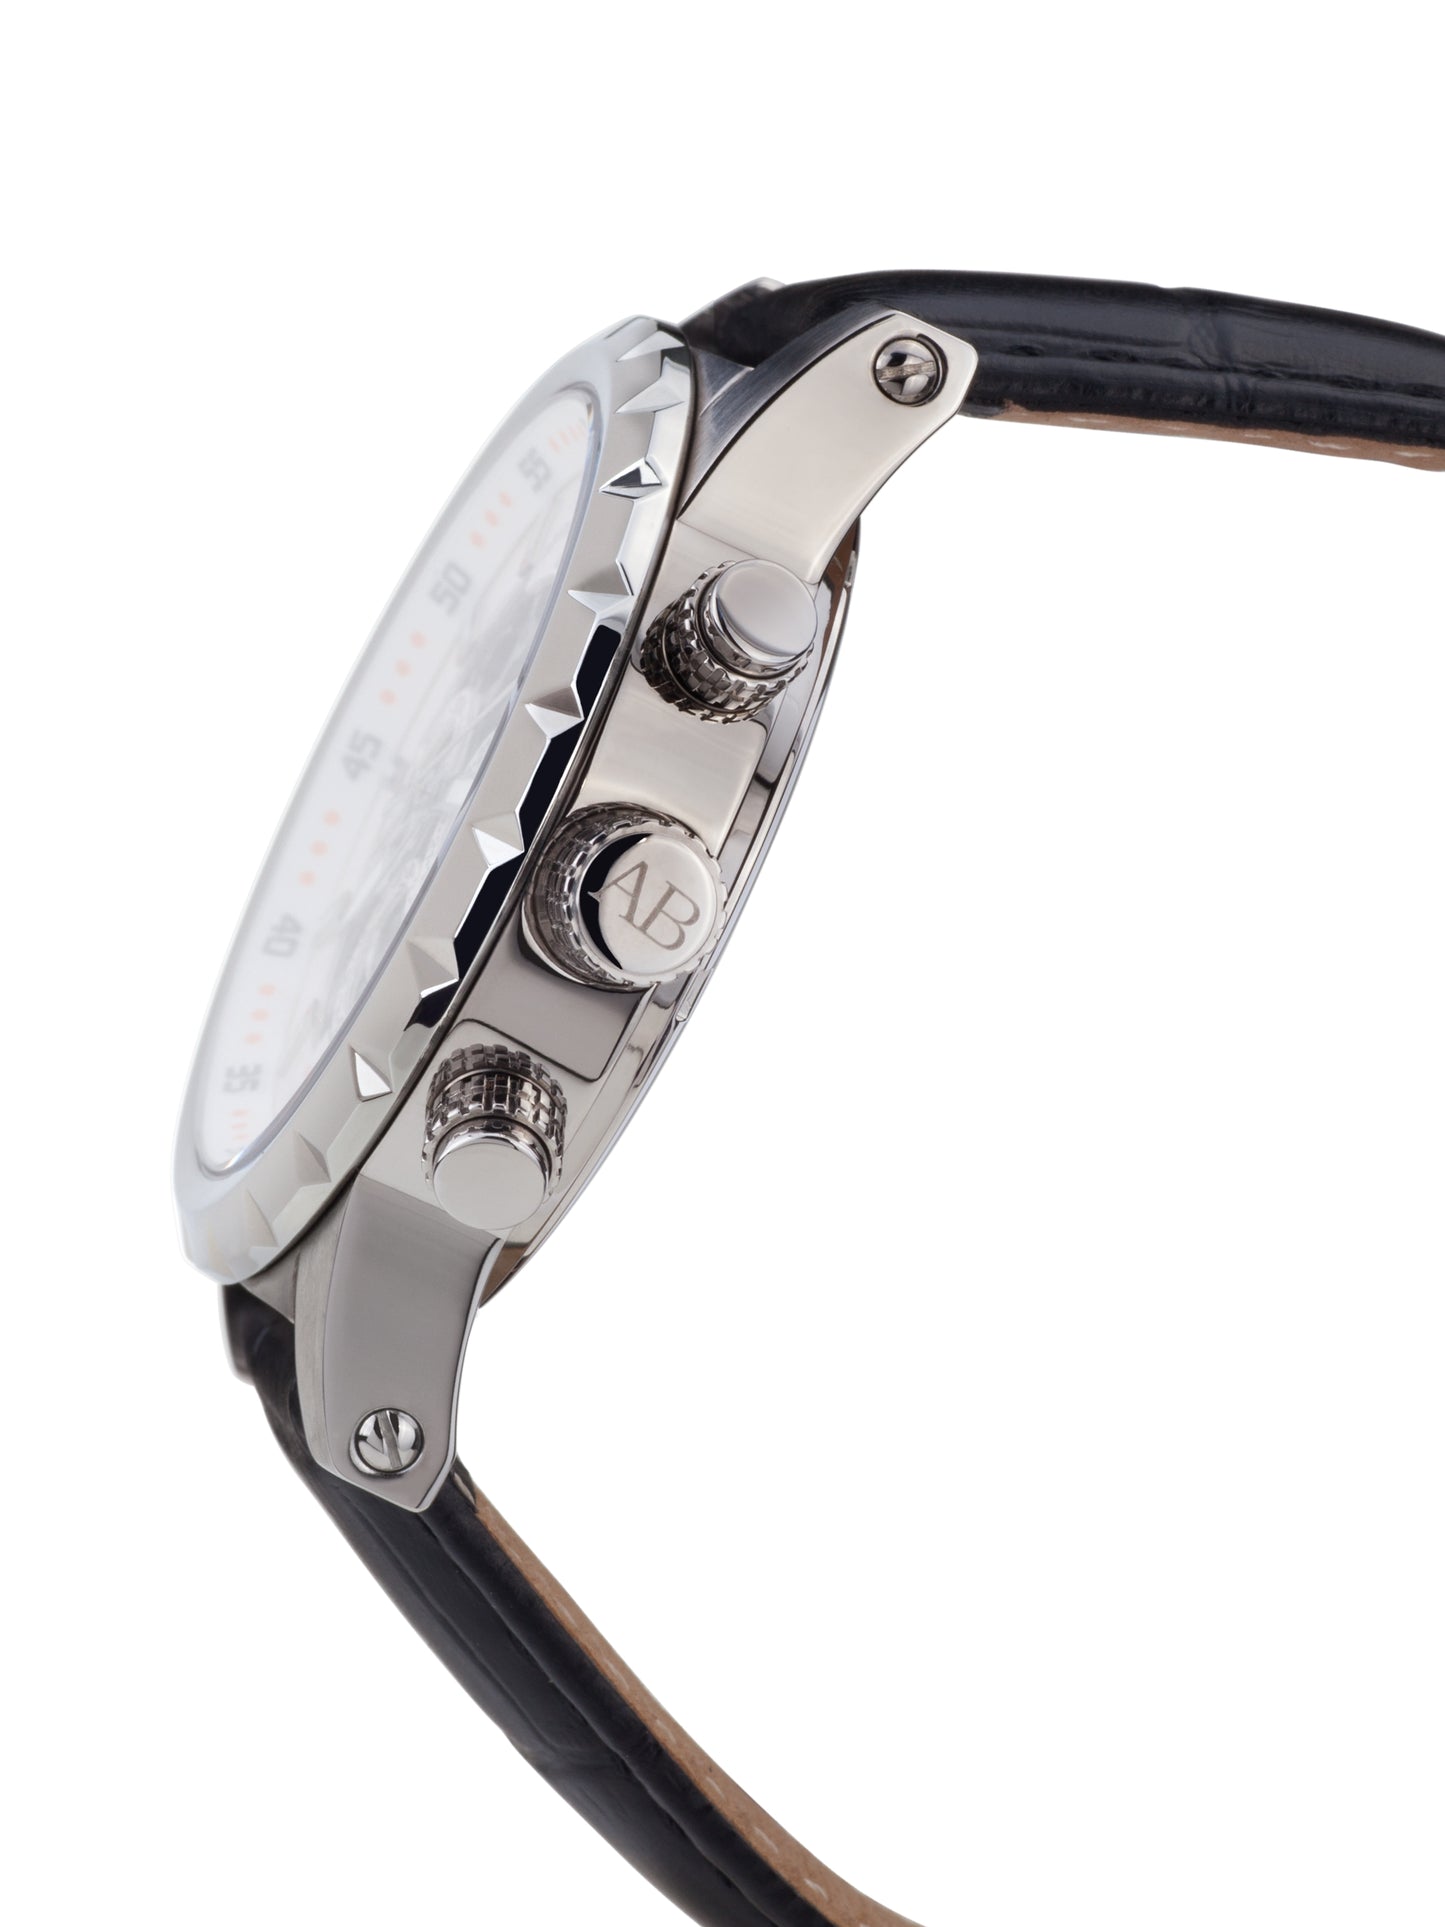 Automatic watches — Conquête — André Belfort — steel silver